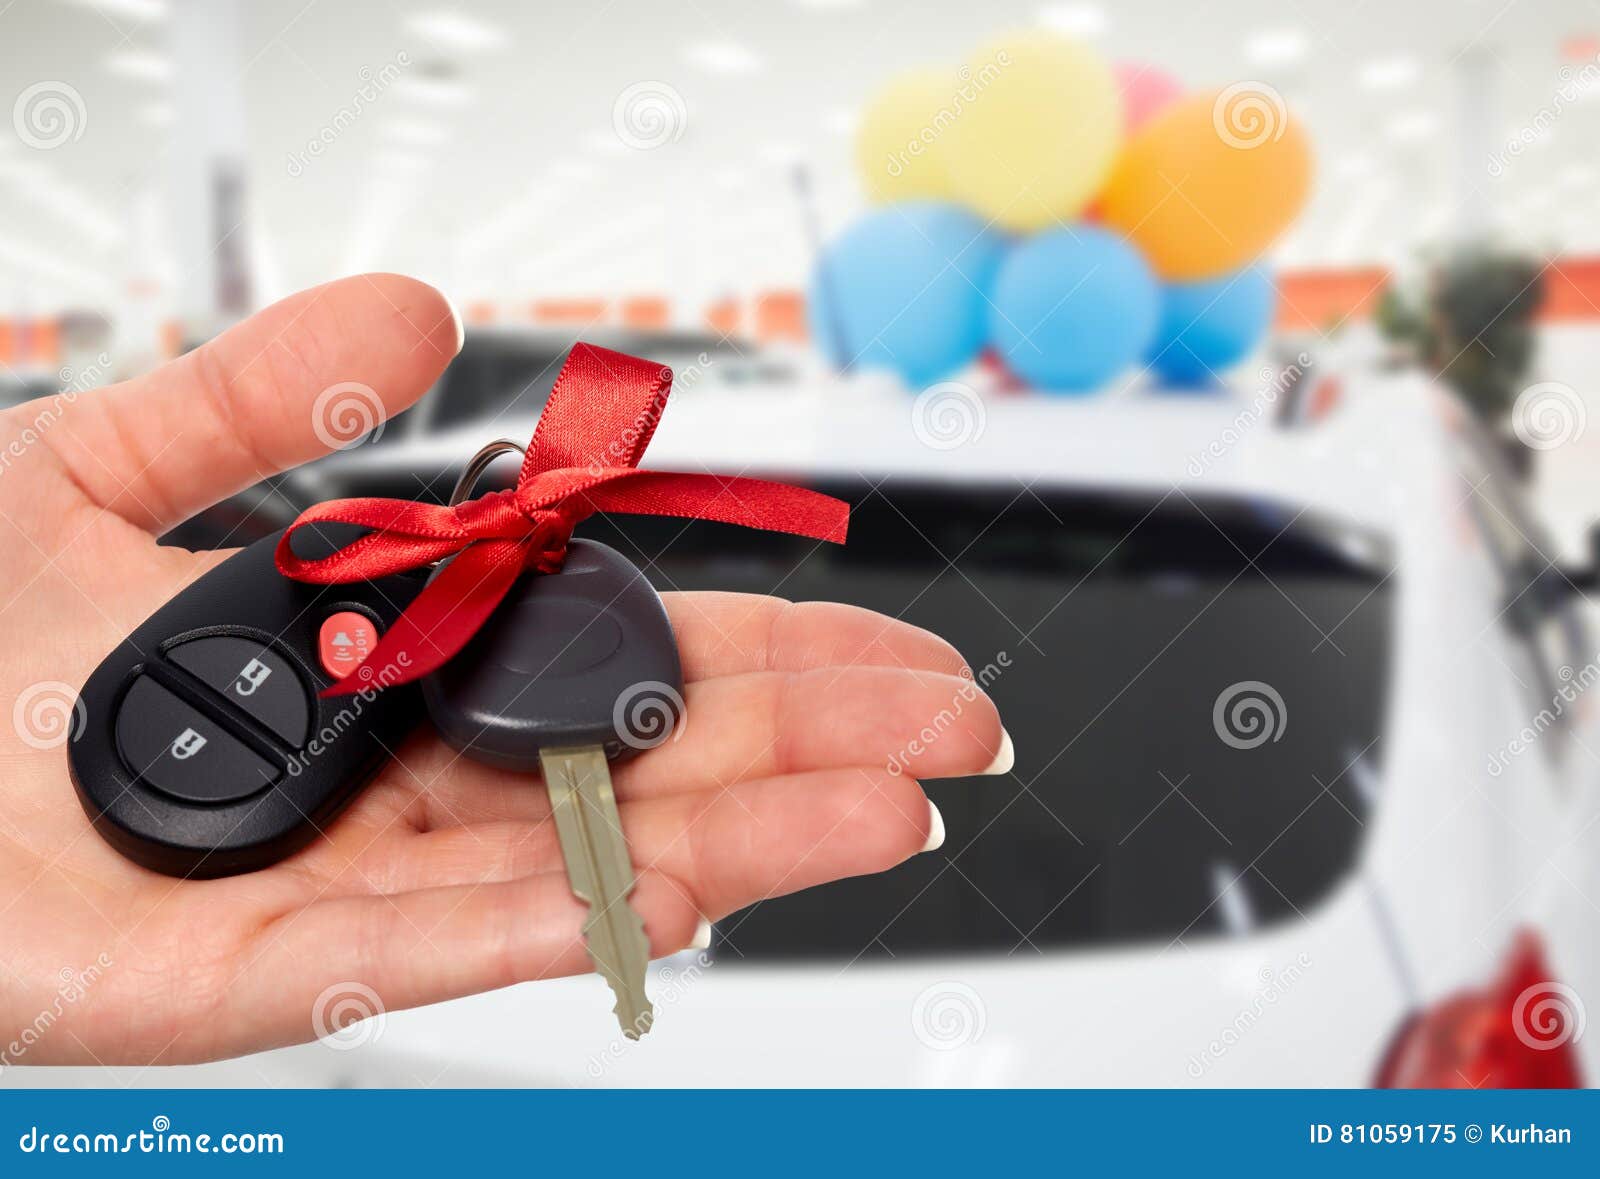 Keyed my car. Ключ от автомобиля в руке. Ключи от автомобиля подарок. Подарок машина ключ. Ключи от машины в женской руке.